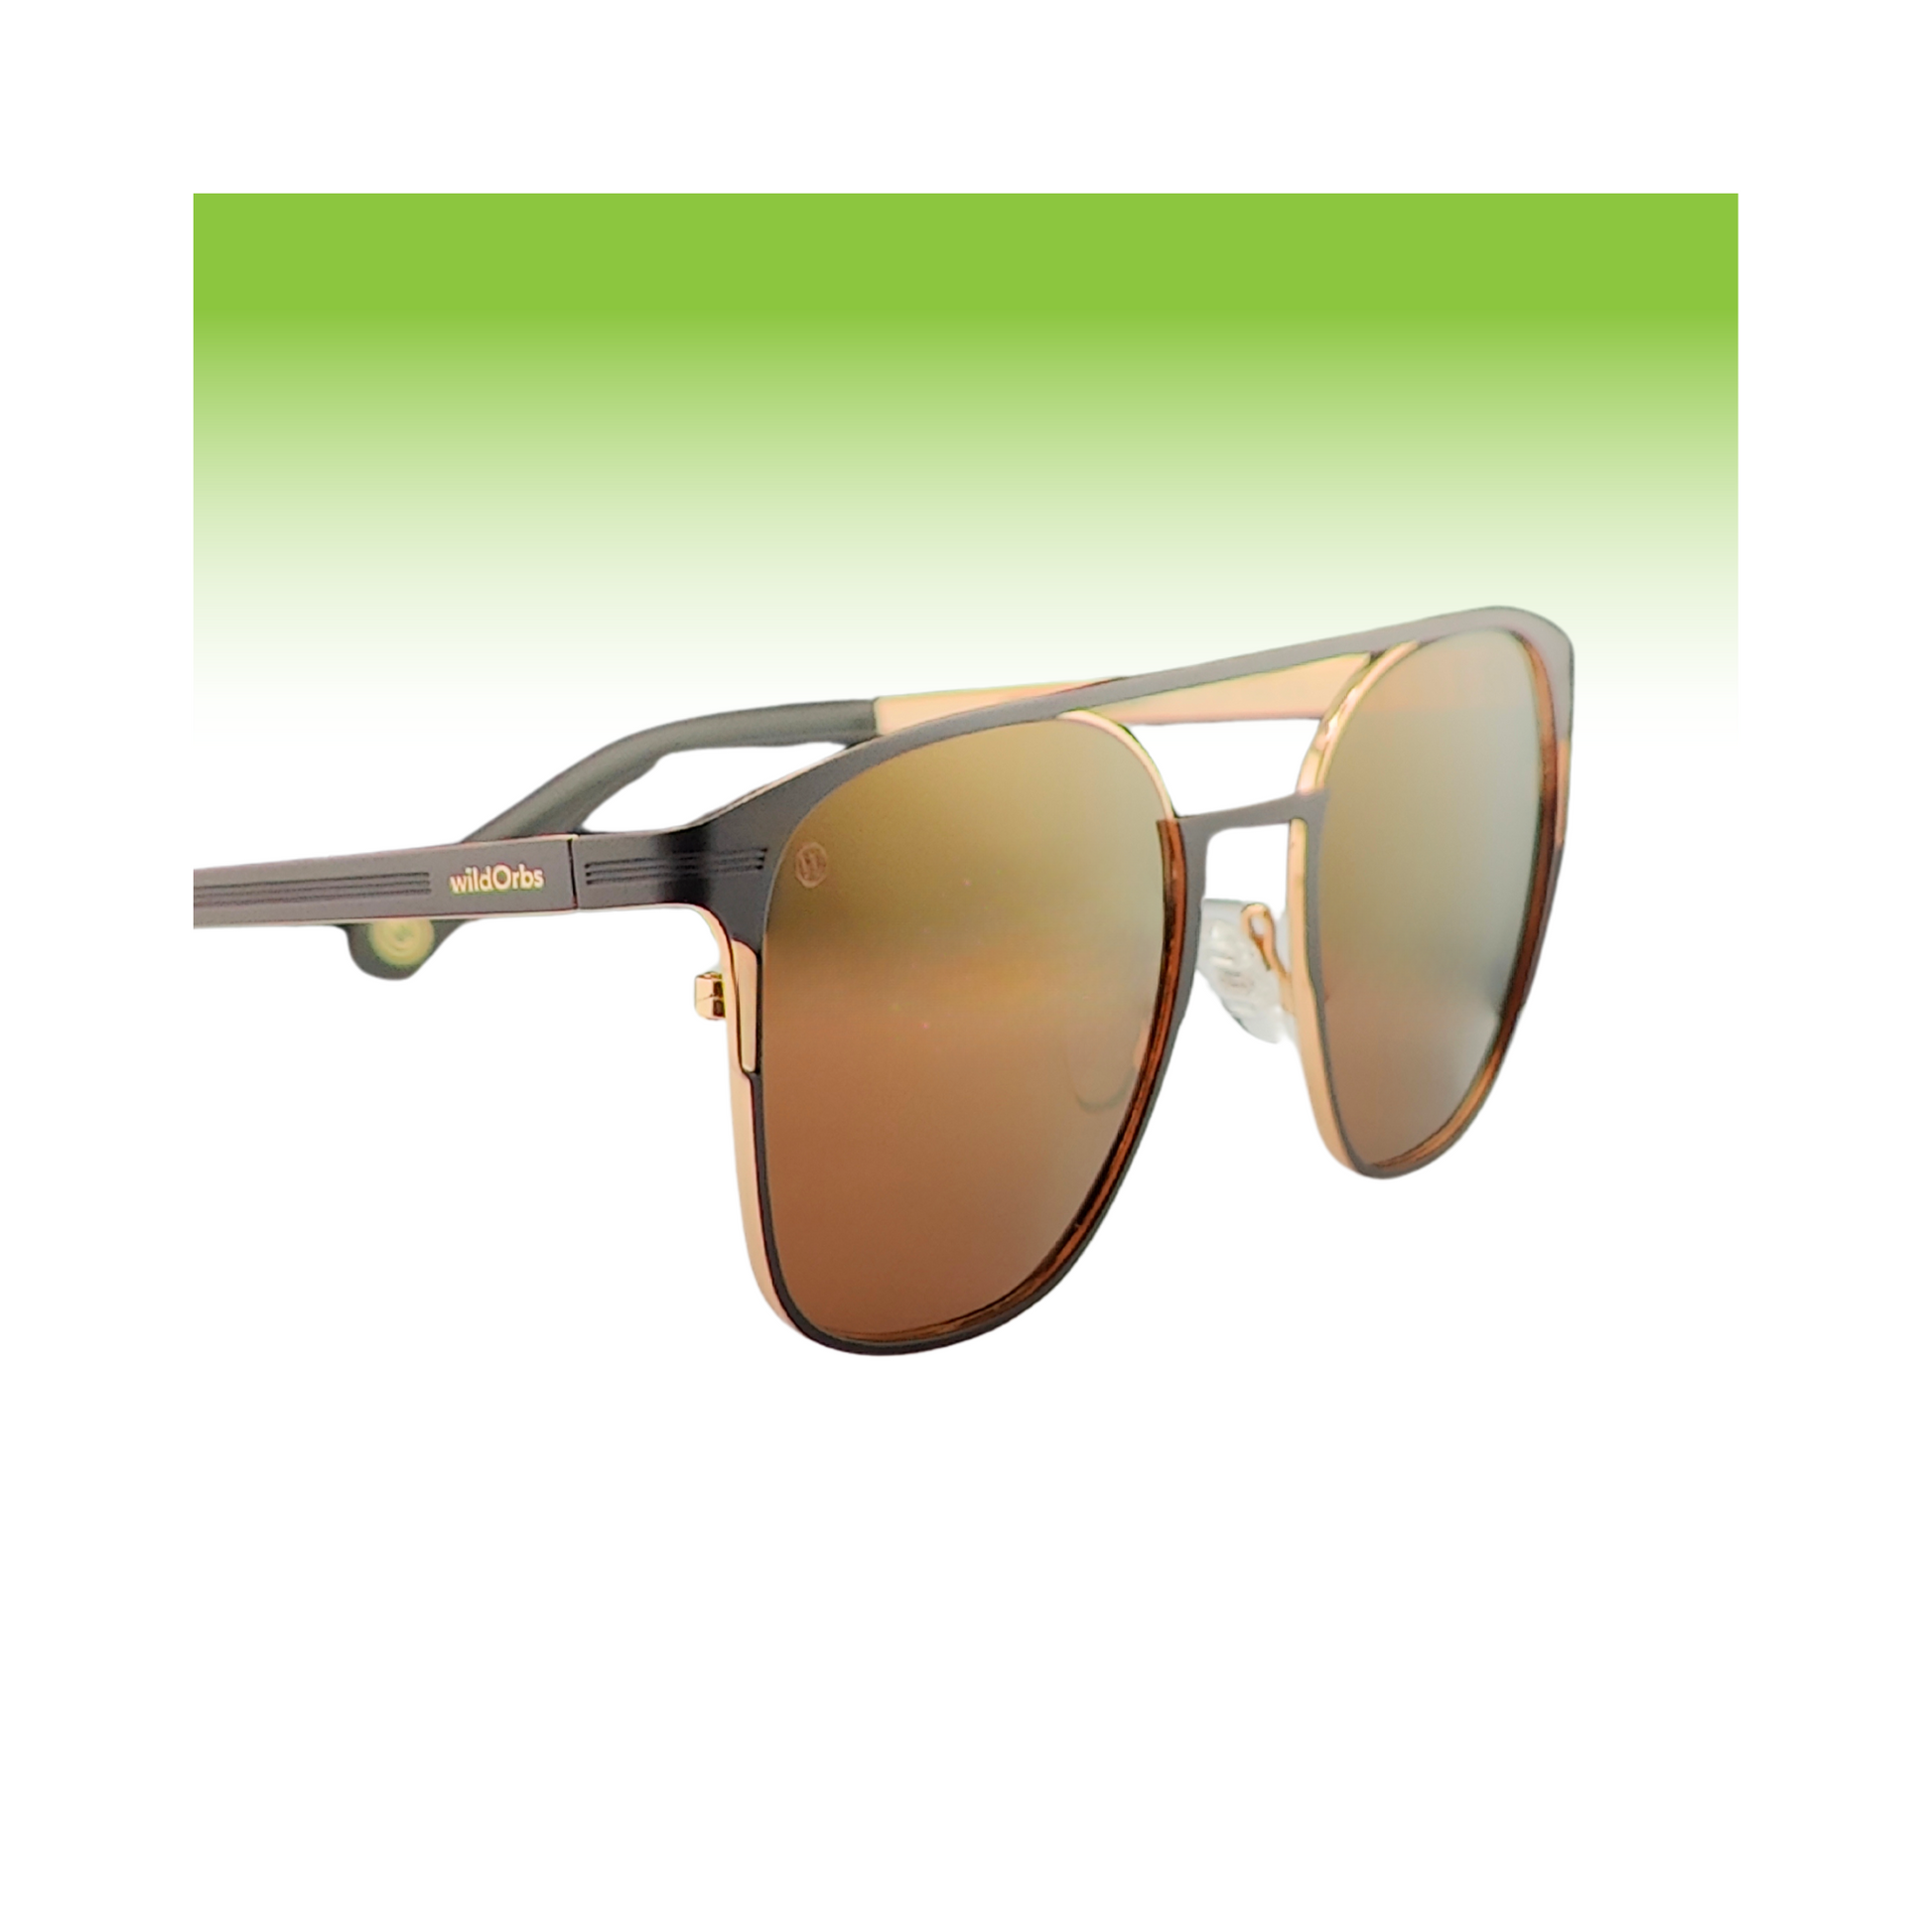 Sparrow Gold luxury sunglasses image